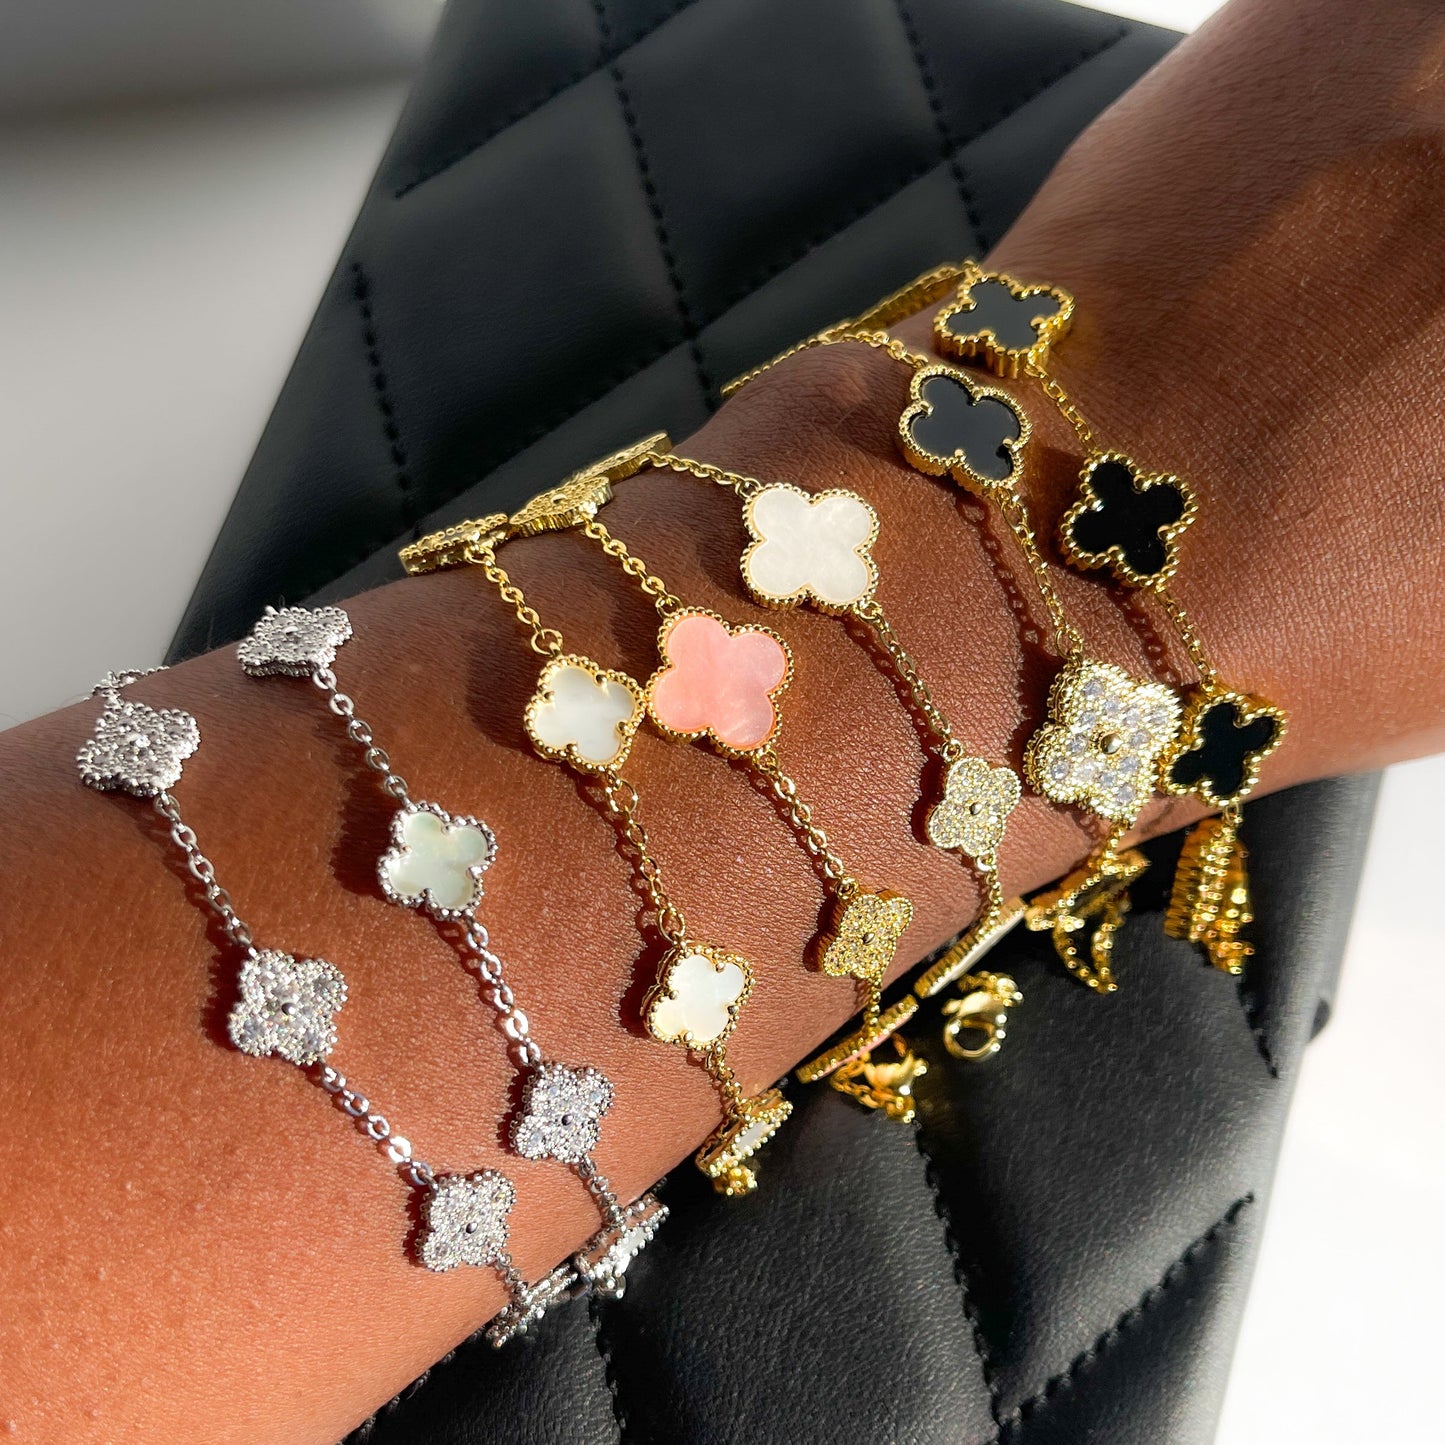 Charisma bracelet - Pink Diamond